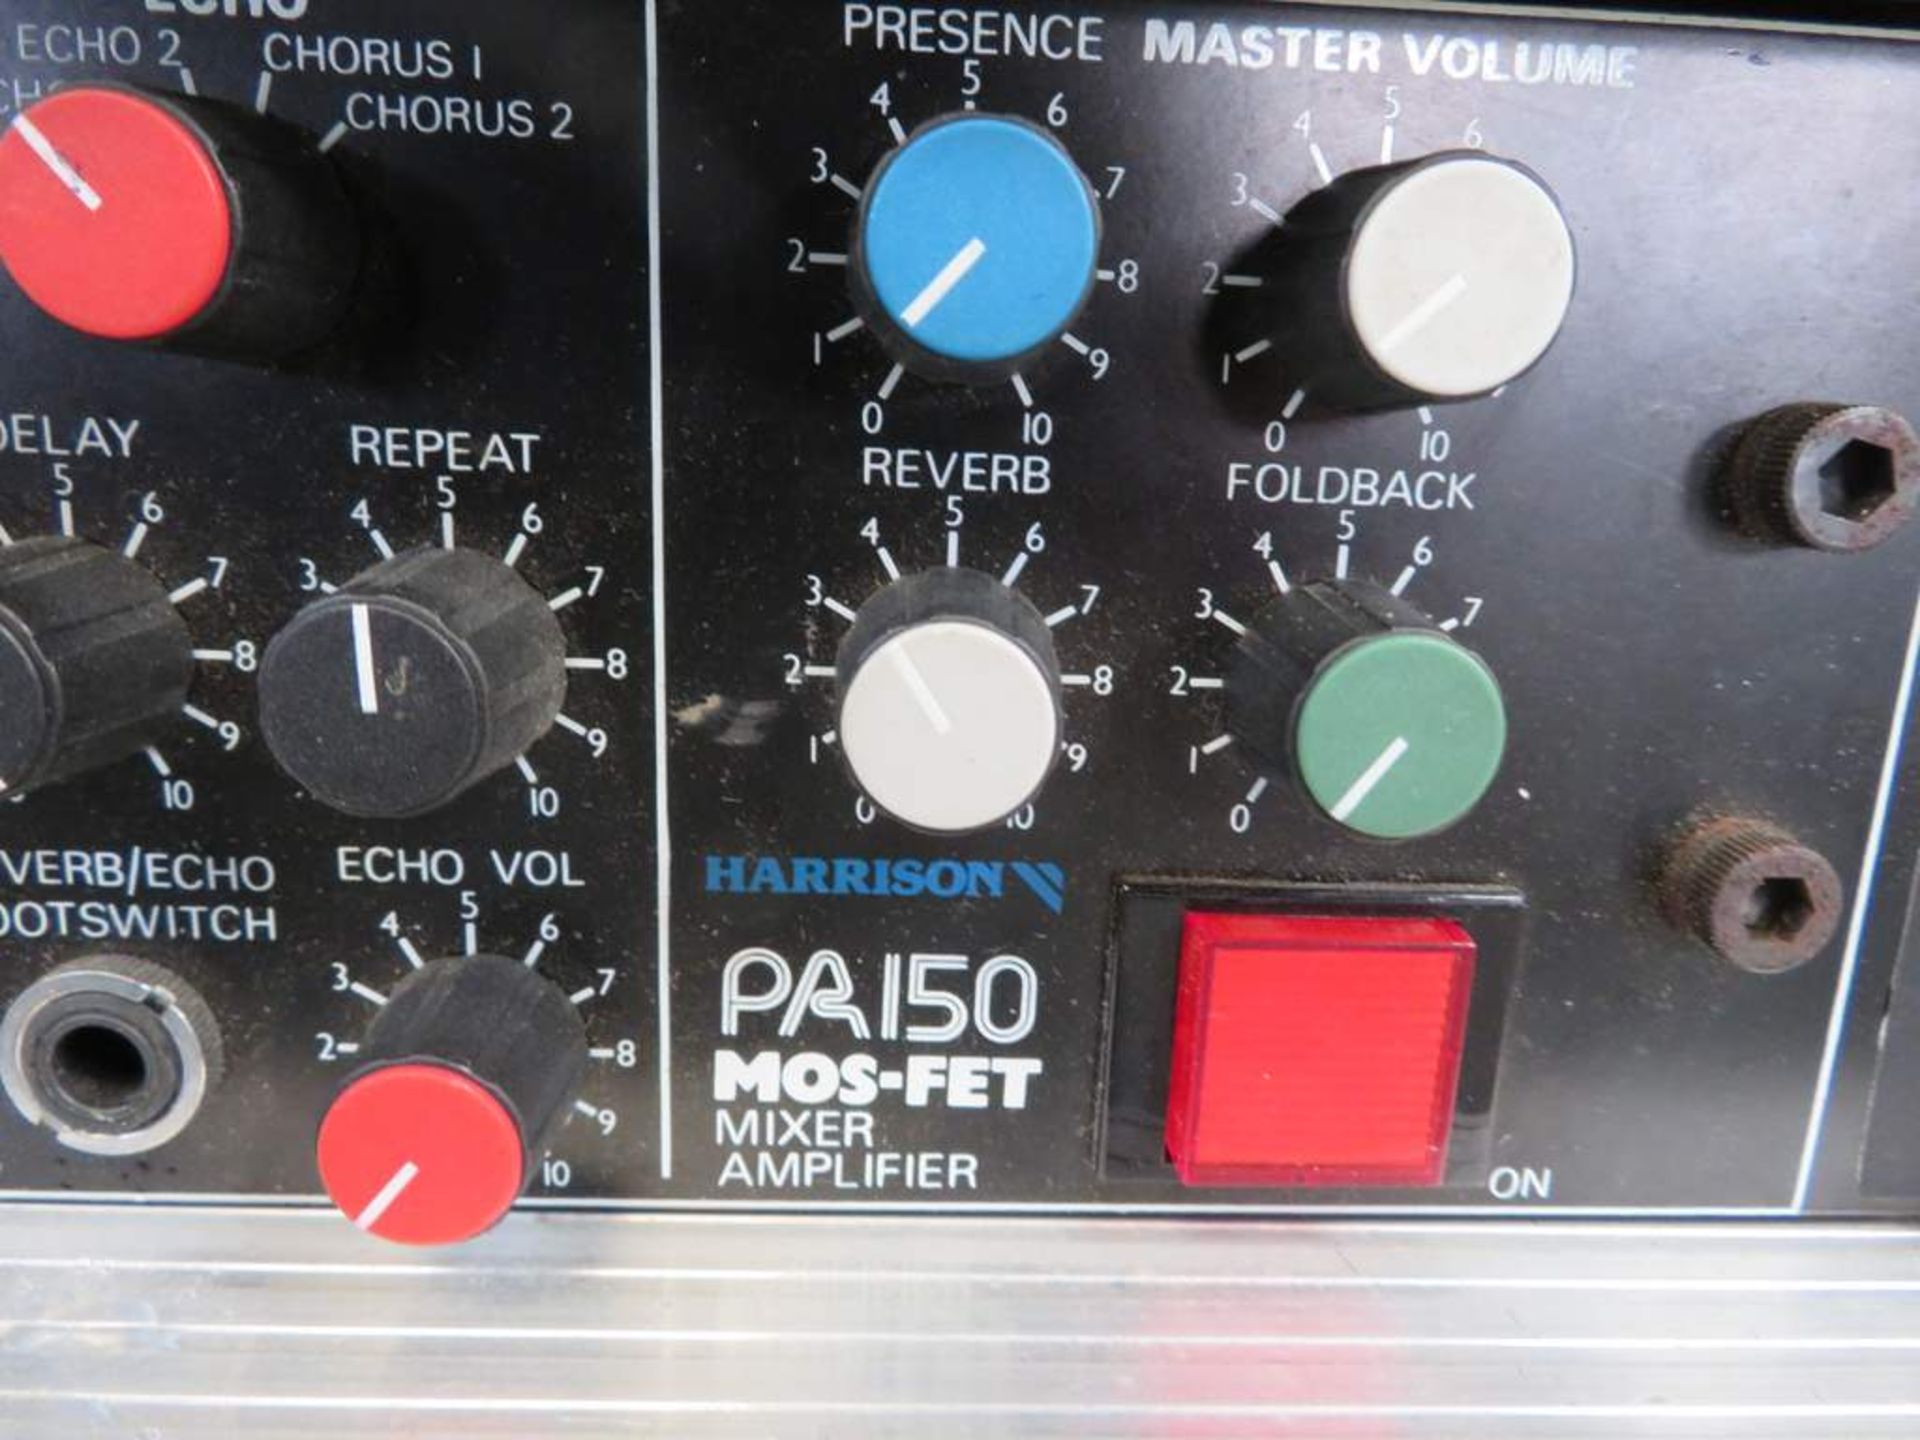 Harrison PA150 Mixer Amplifier - Image 3 of 7